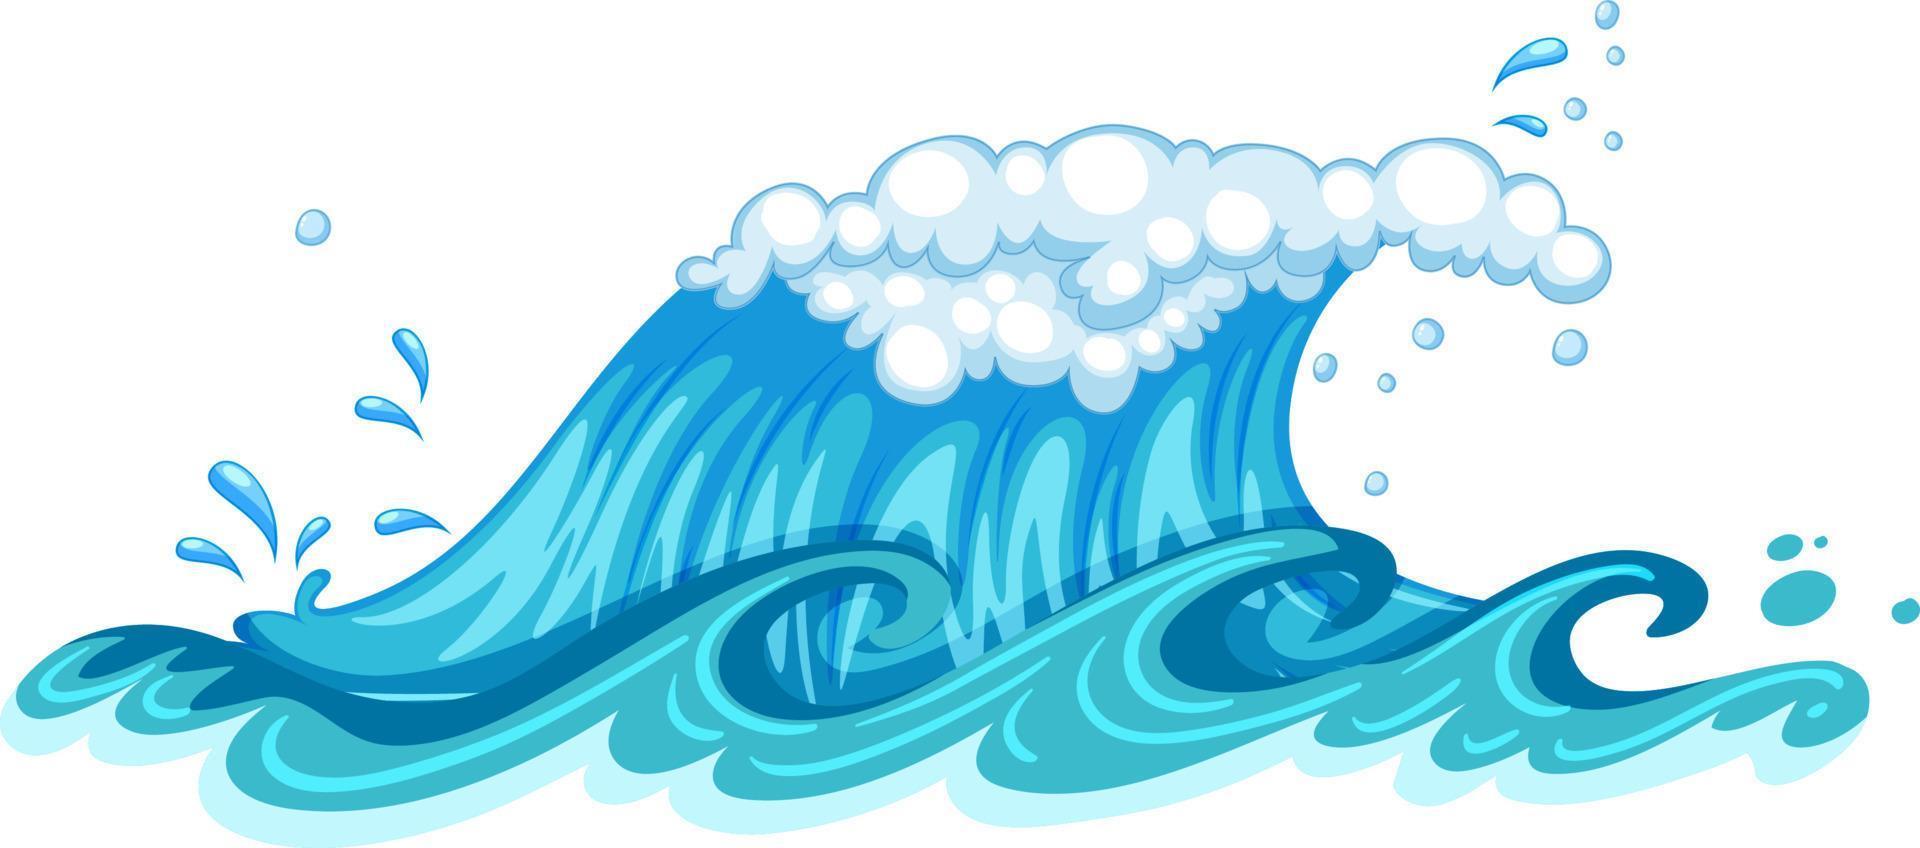 ola oceánica en estilo de dibujos animados aislado 10516143 Vector en  Vecteezy